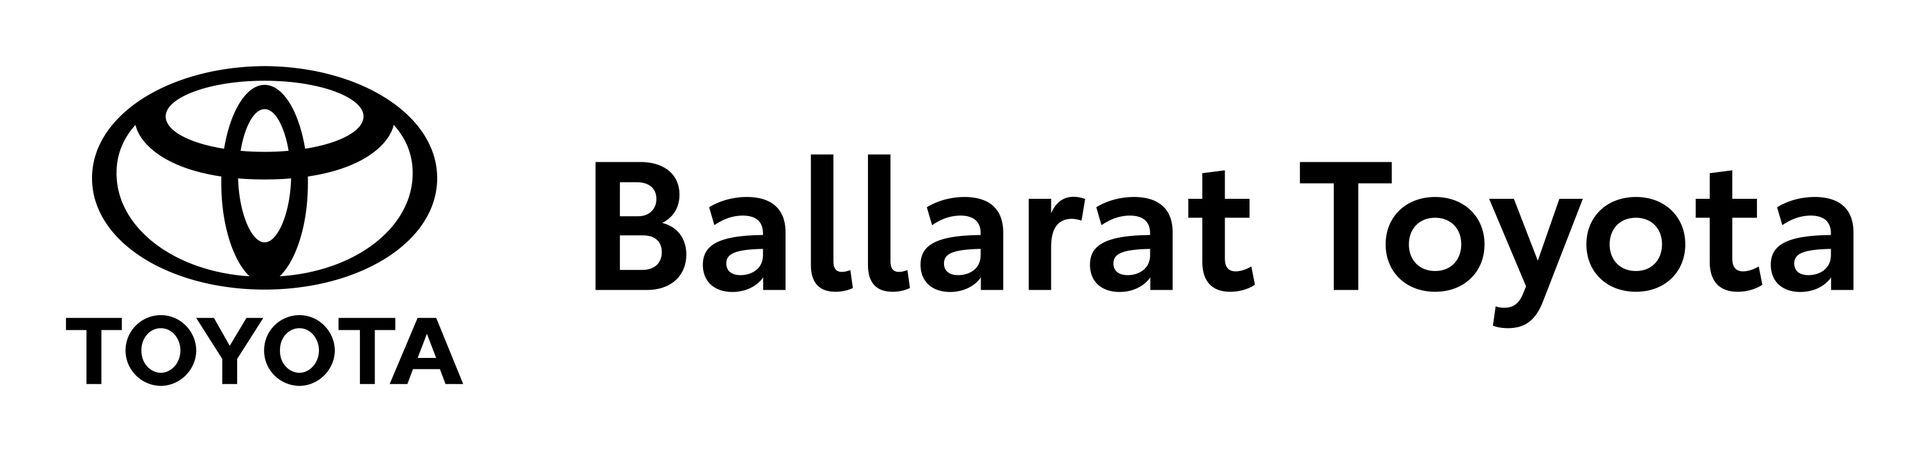 a logo for ballorat toyota with a toyota logo